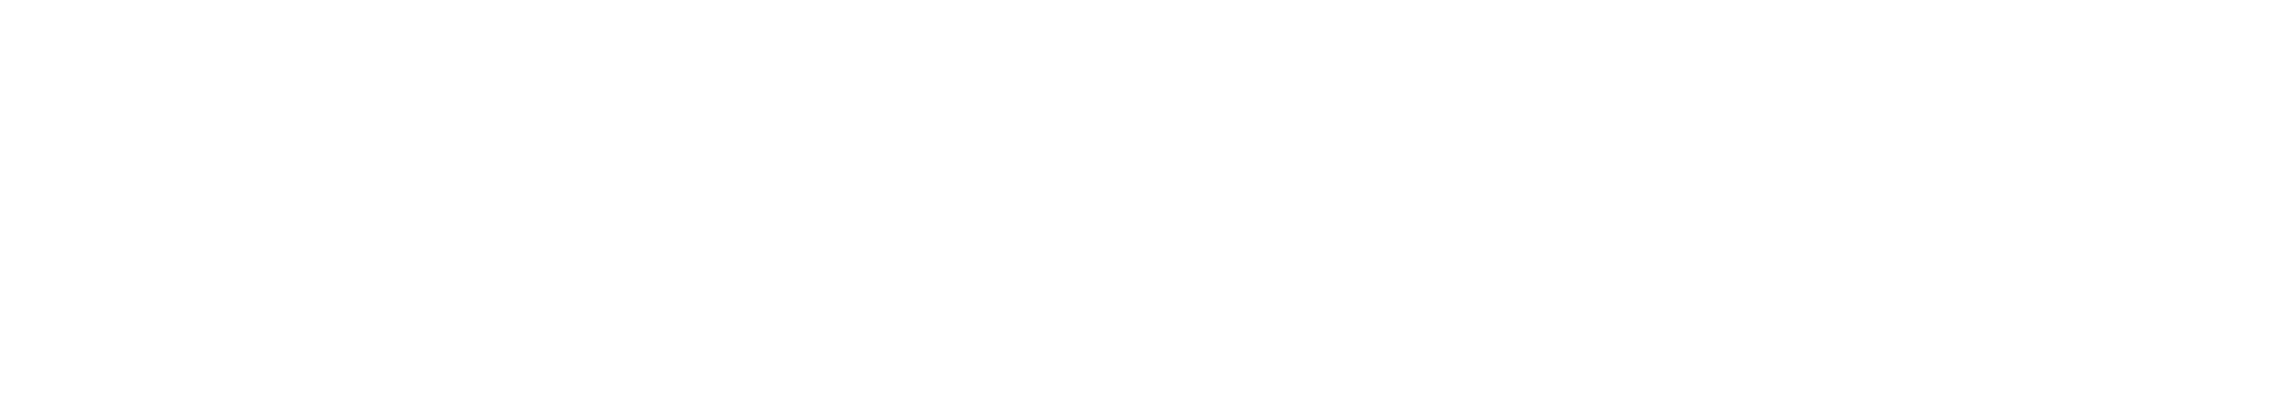 Romero's Automotive Solutions